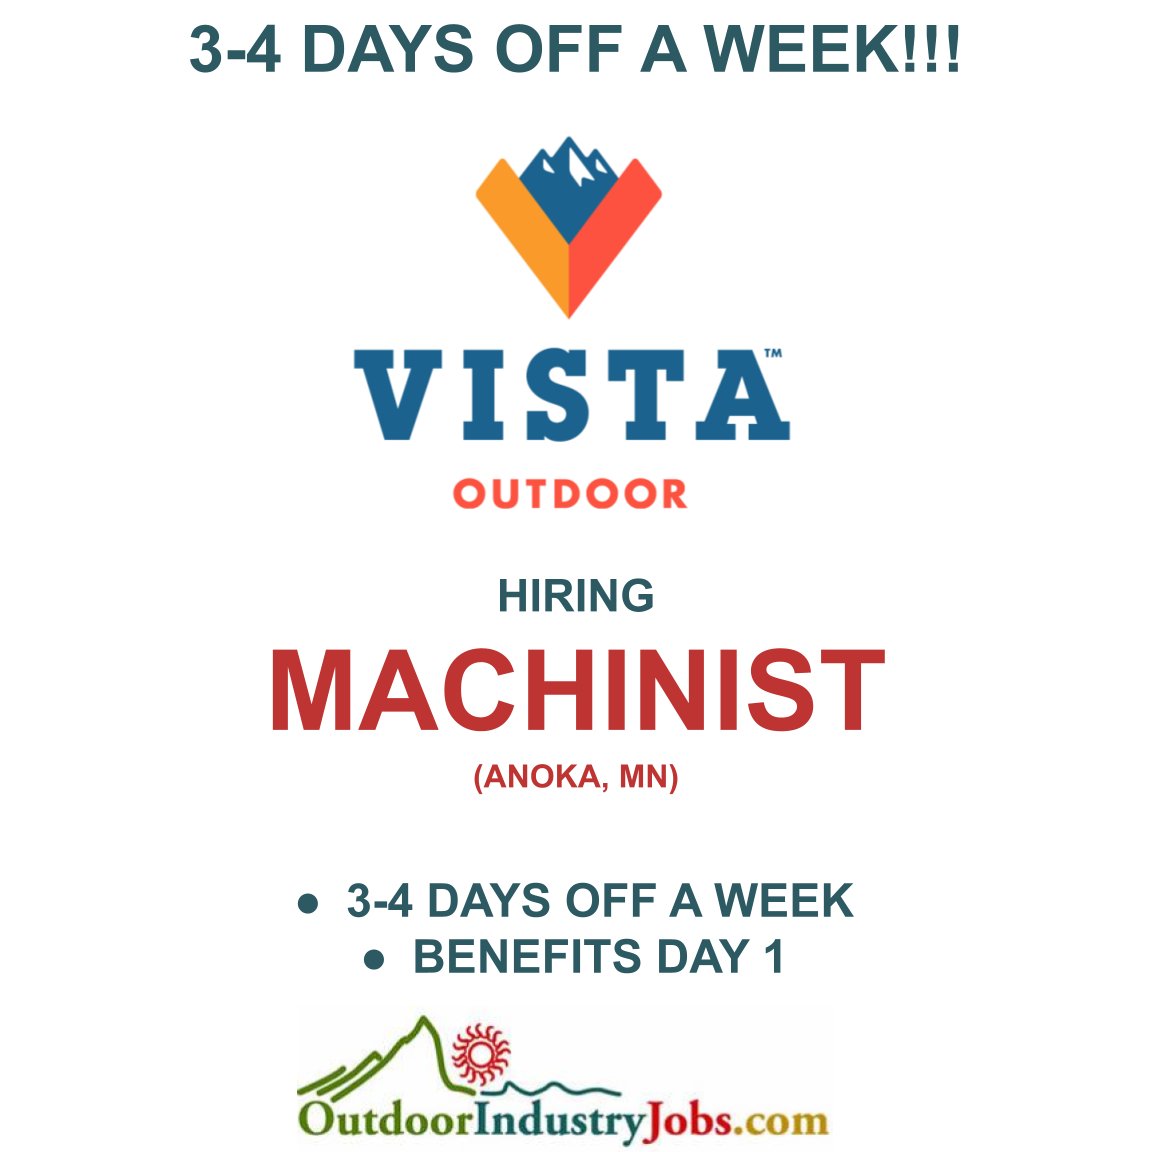 Apply Here: outdoorindustryjobs.com/JobDetail/GetJ…

#outdoorindustryjobs #machinist #machinistlife #machinistlifestyle #anoka #anokamn #minnesotajobs #hiring #hiringnow
@VistaOutdoorInc